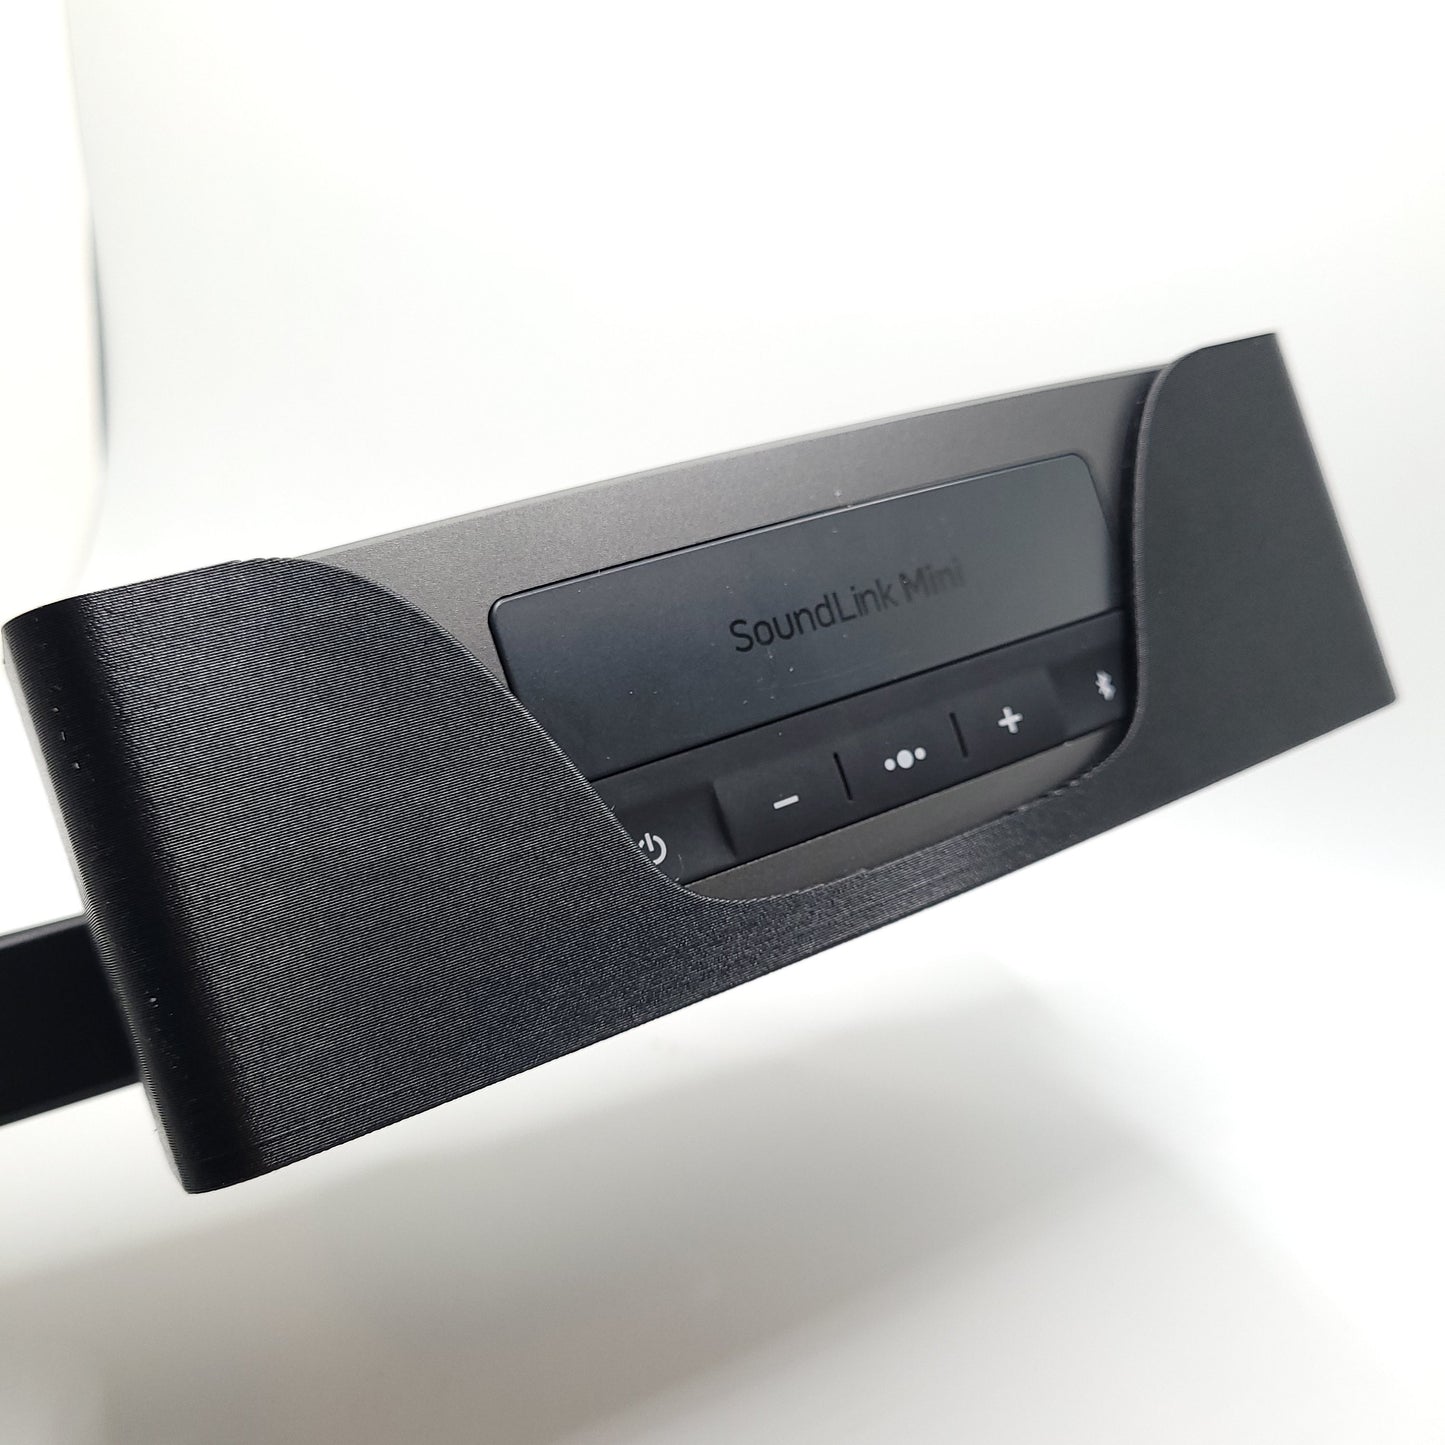 Bose Soundlink Mini Speaker Holder, Uses Velcro Strap to Attach to Golf Cart, UTV, Boat, Straps to any Vertical or Horizontal Bar